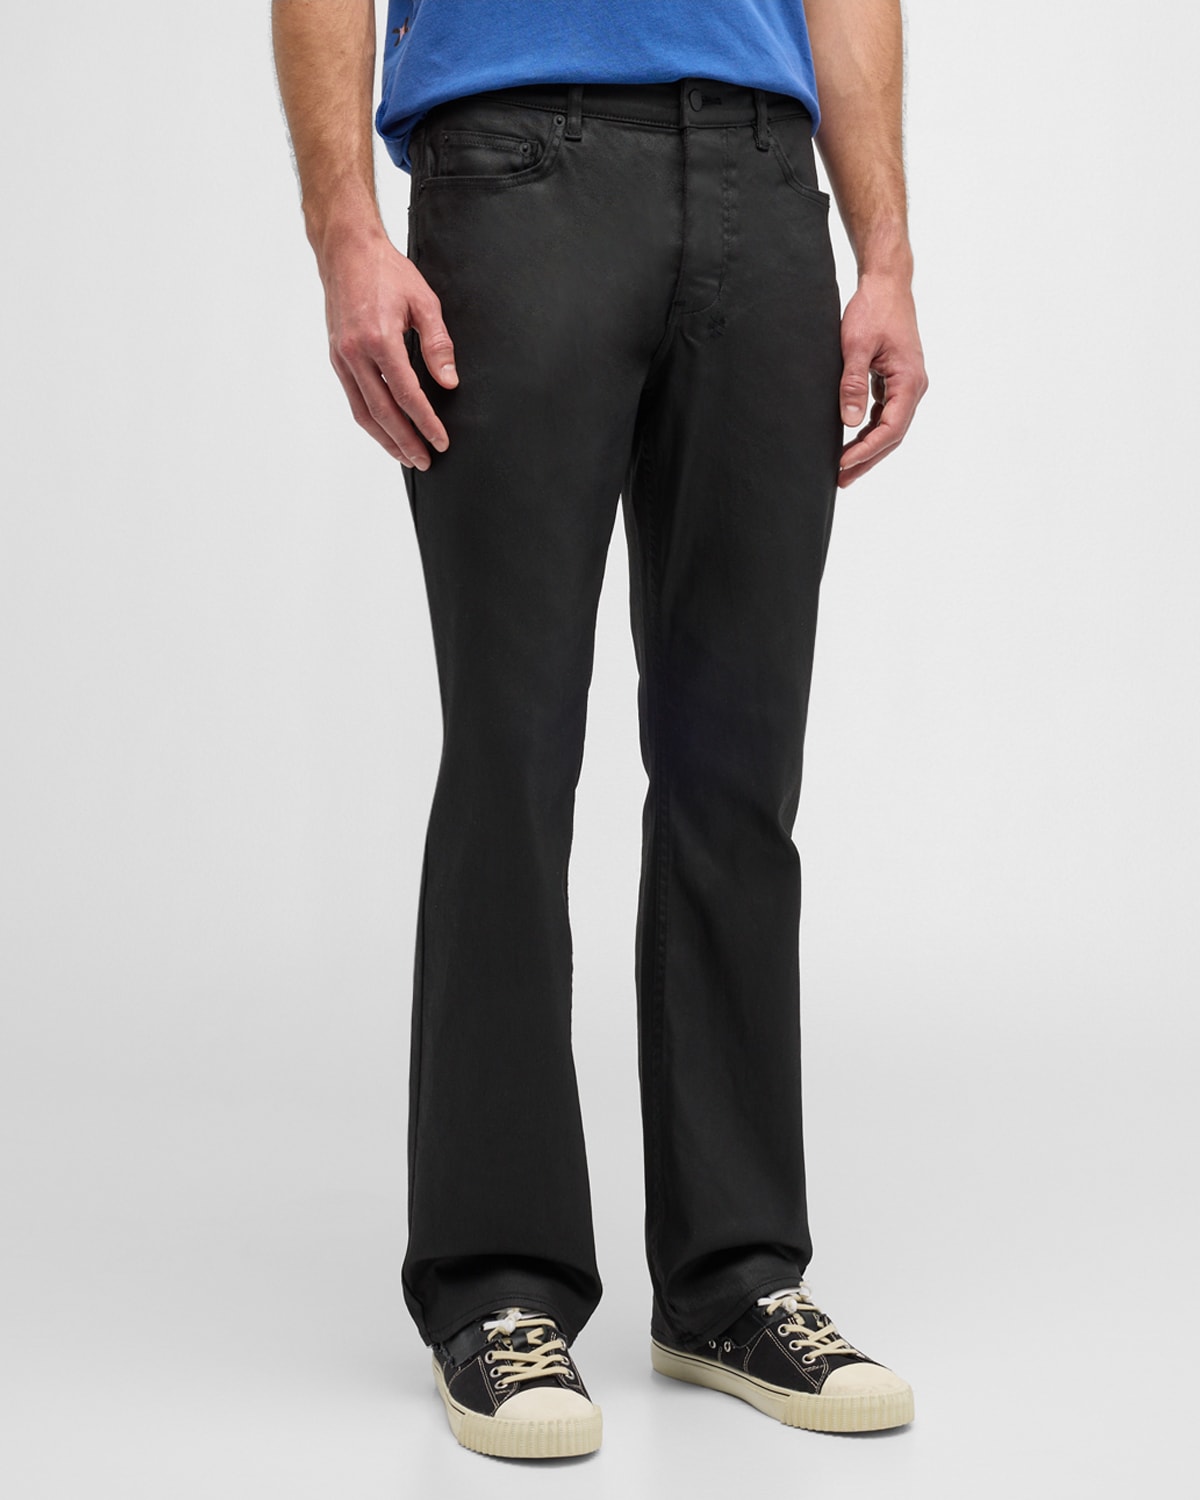 Men's Bronko Black Wax Bootcut Jeans